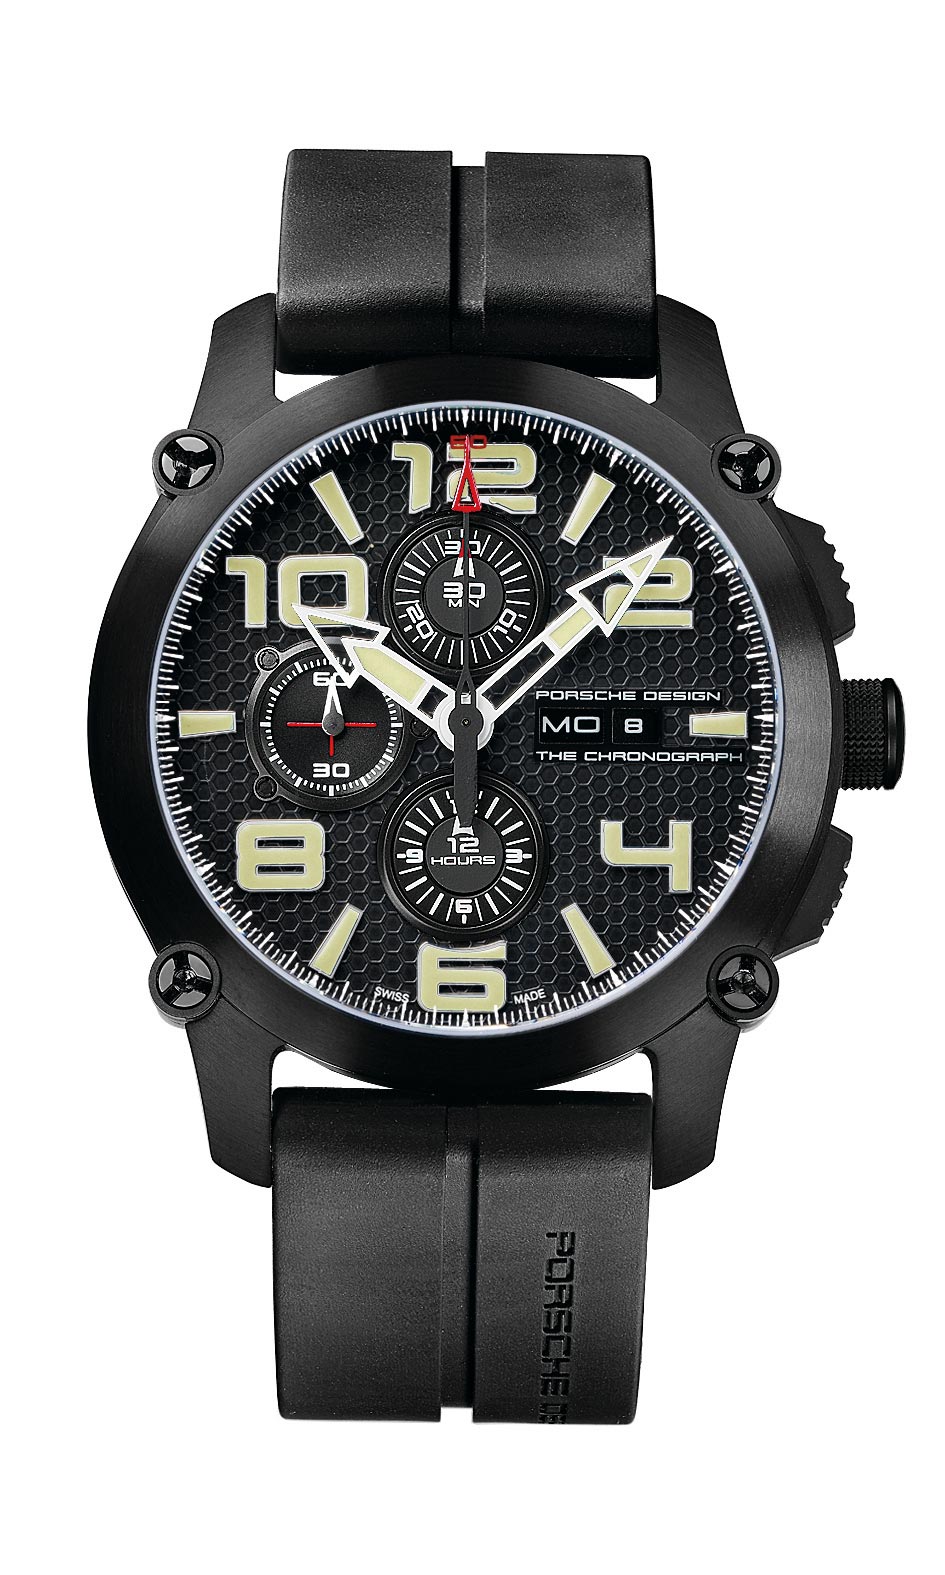 Porsche Design P’6930 Chronograph Watch